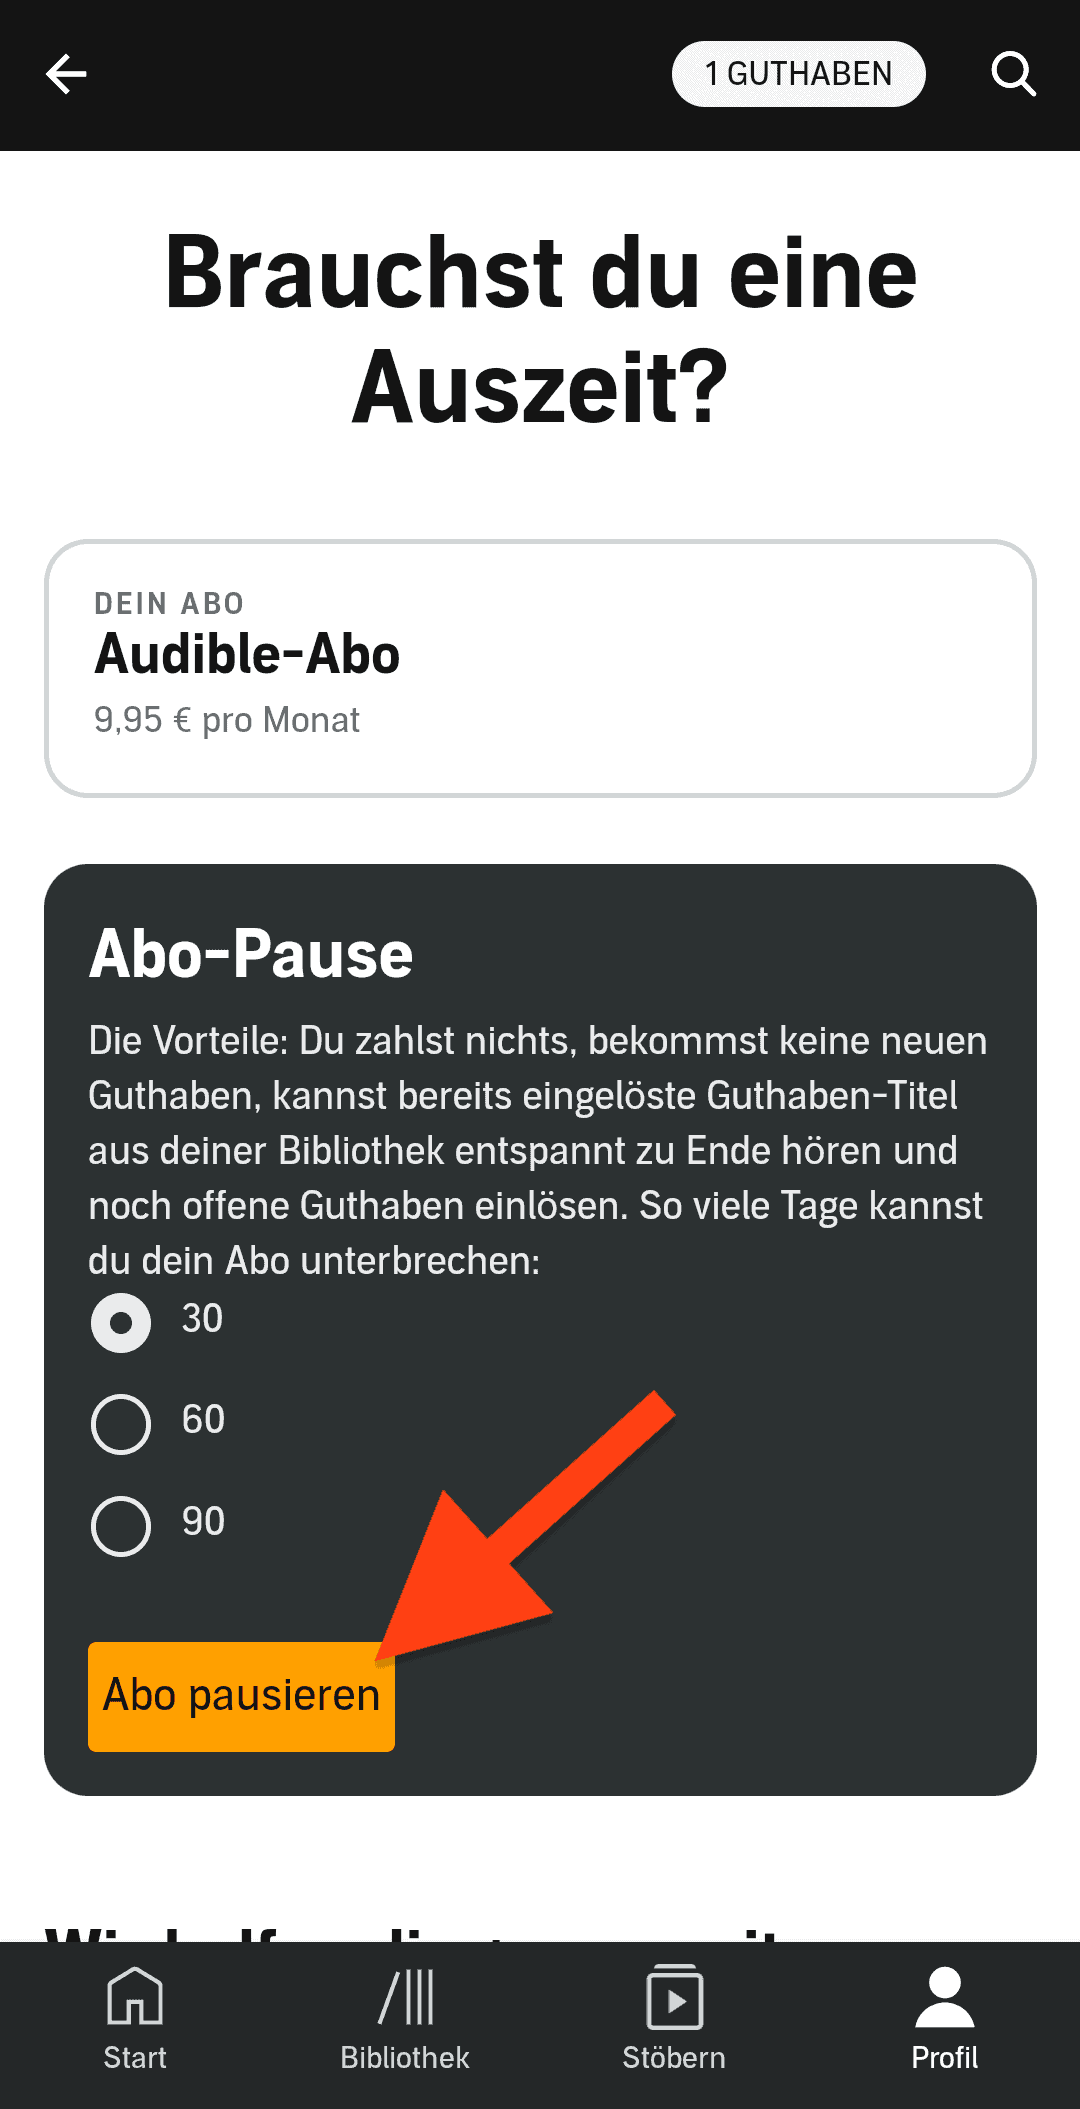 Audible Abo pausieren in der App (2)